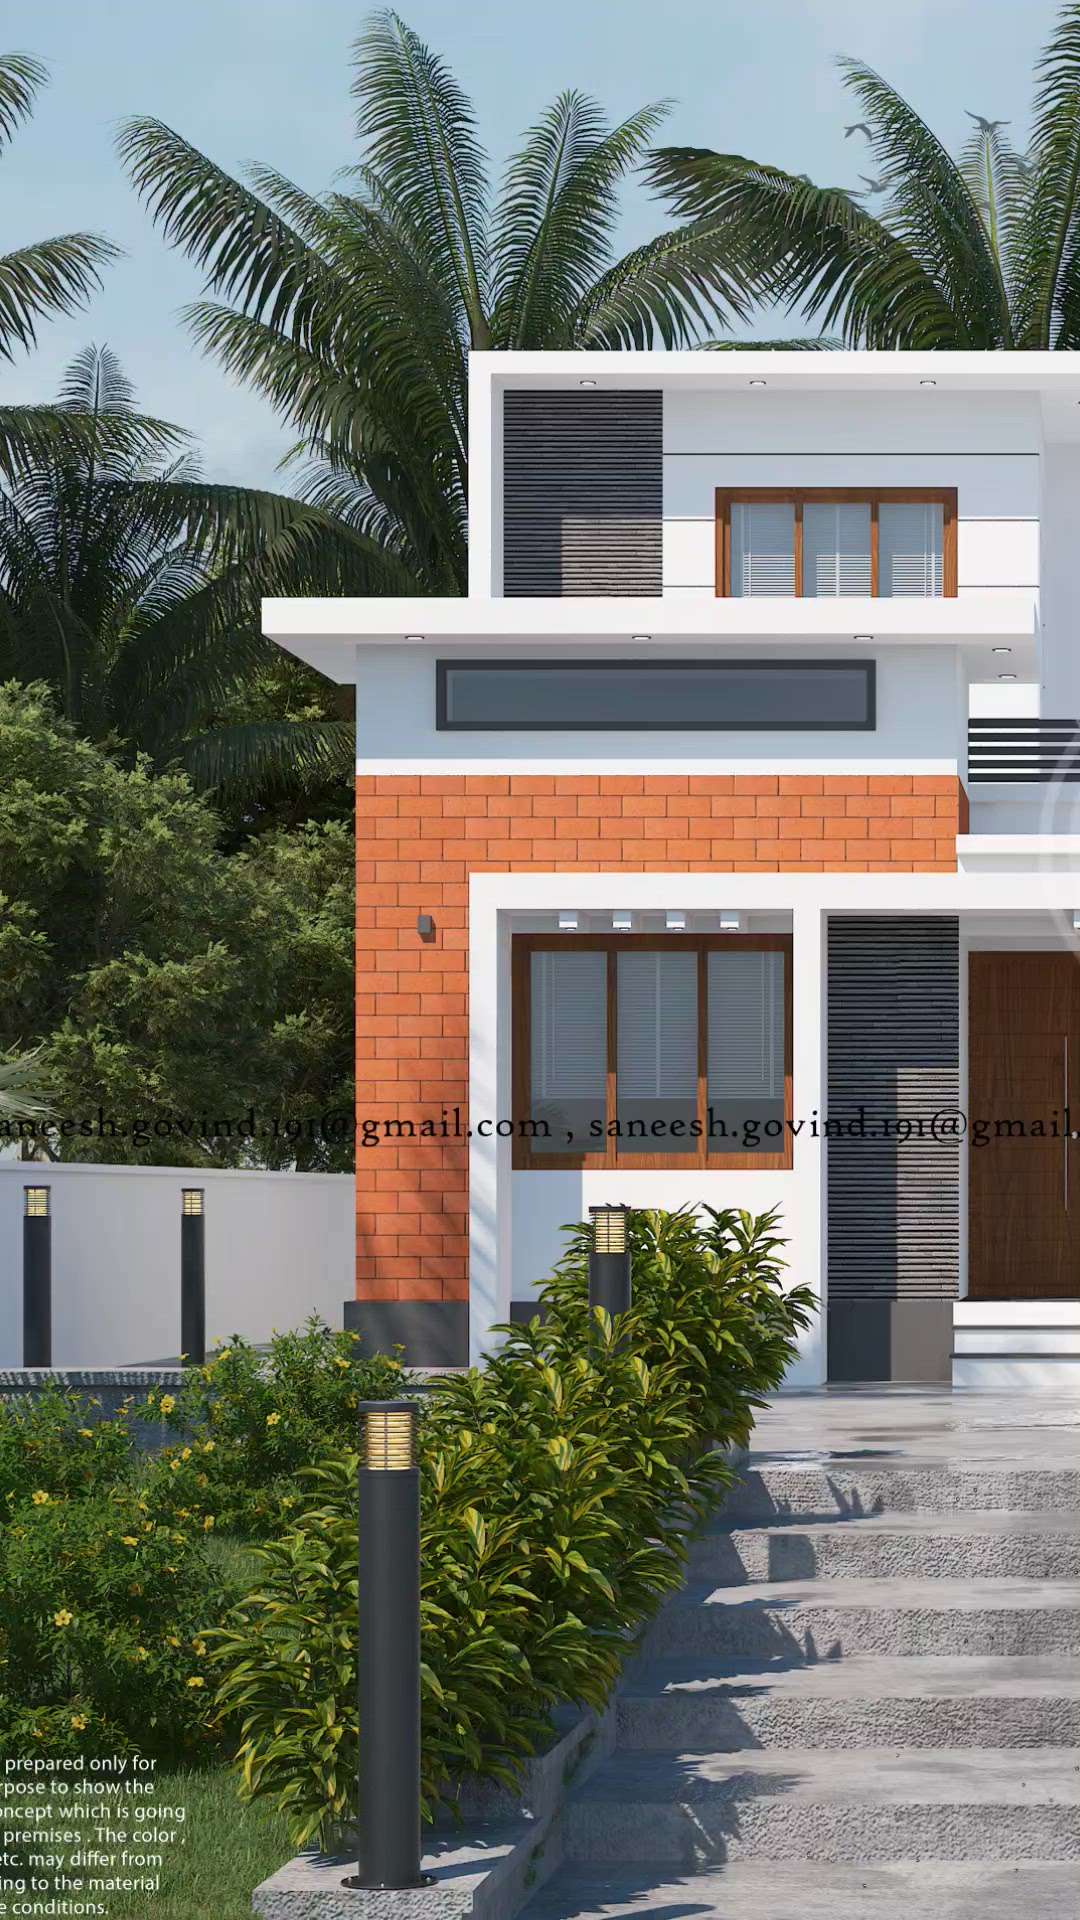 proposed exterior at Ezhumangad
Area : 1200 sqft
Designed by : Saneesh govind
.
.
.
.
.
.
.
.
.
 #KeralaStyleHouse
#keralahomes
#veedu
#keralaarchitects